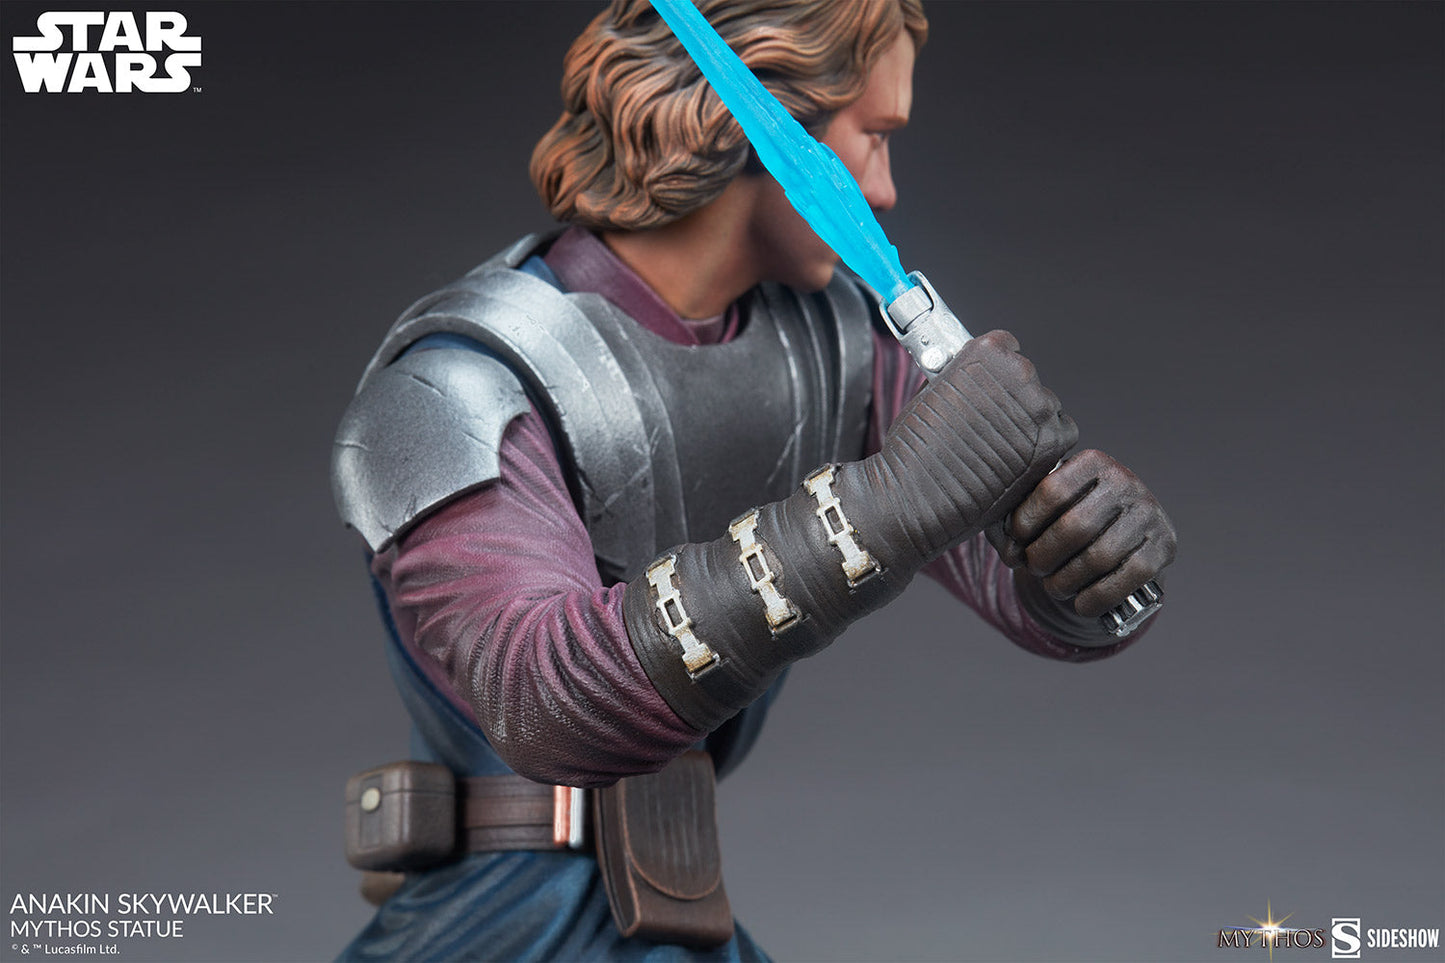 Anakin Skywalker Star Wars Mythos Statue by Sideshow